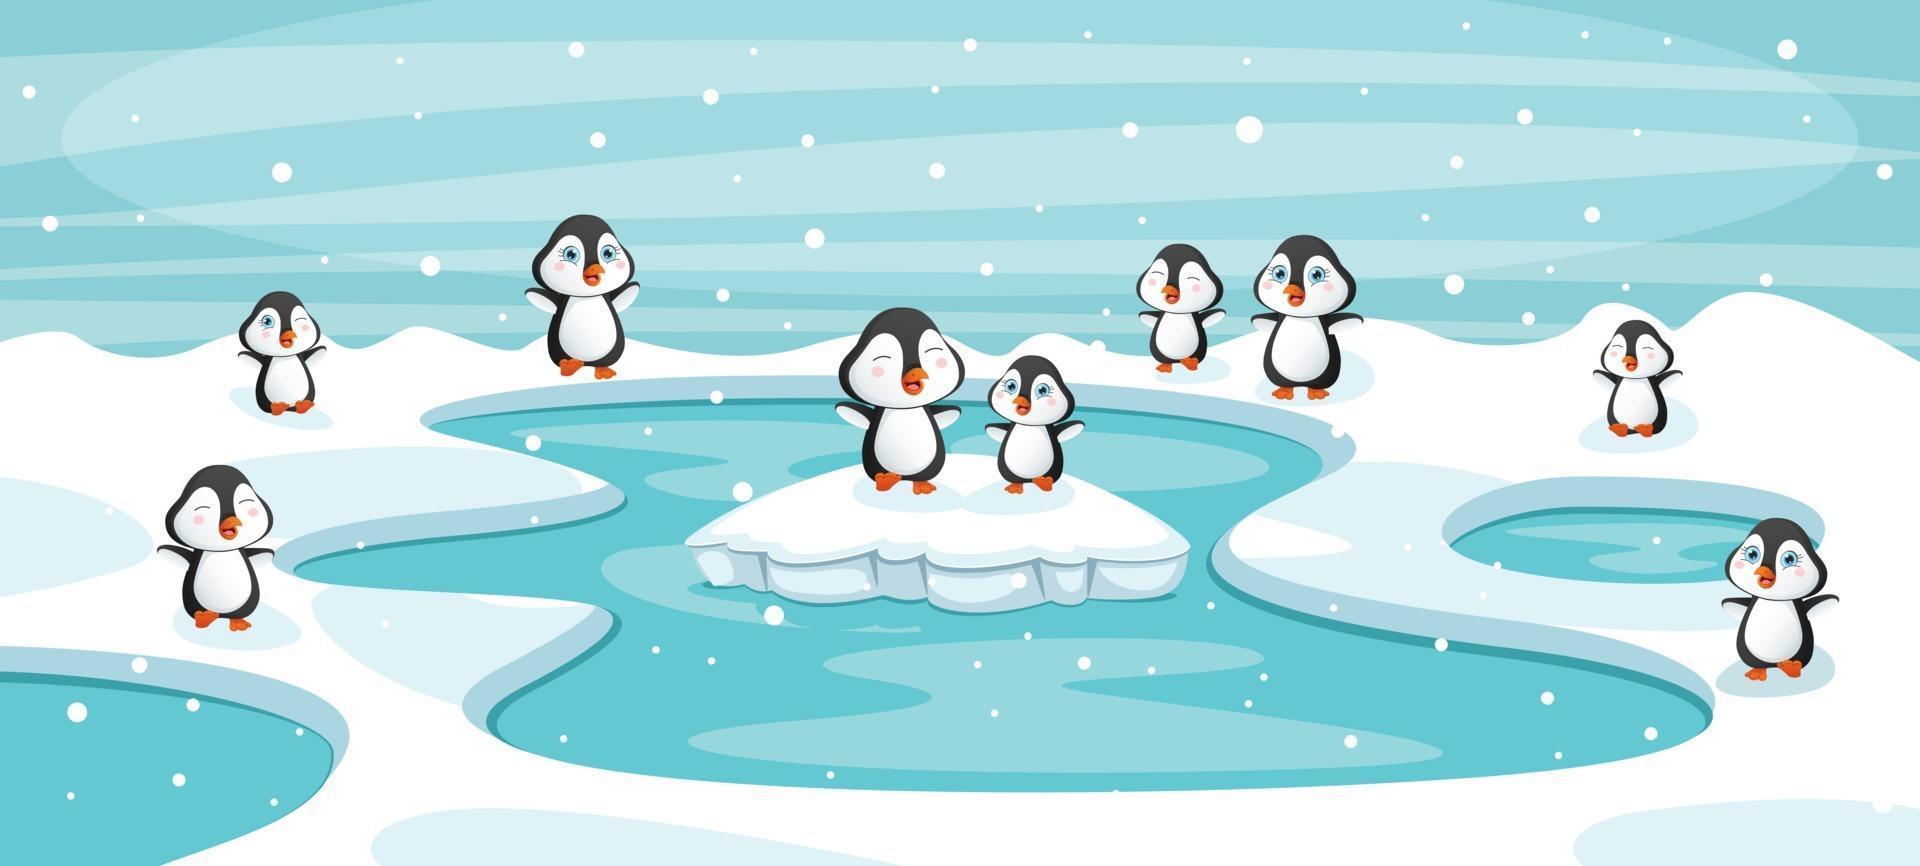 dibujo de dibujos animados de pingüinos vector